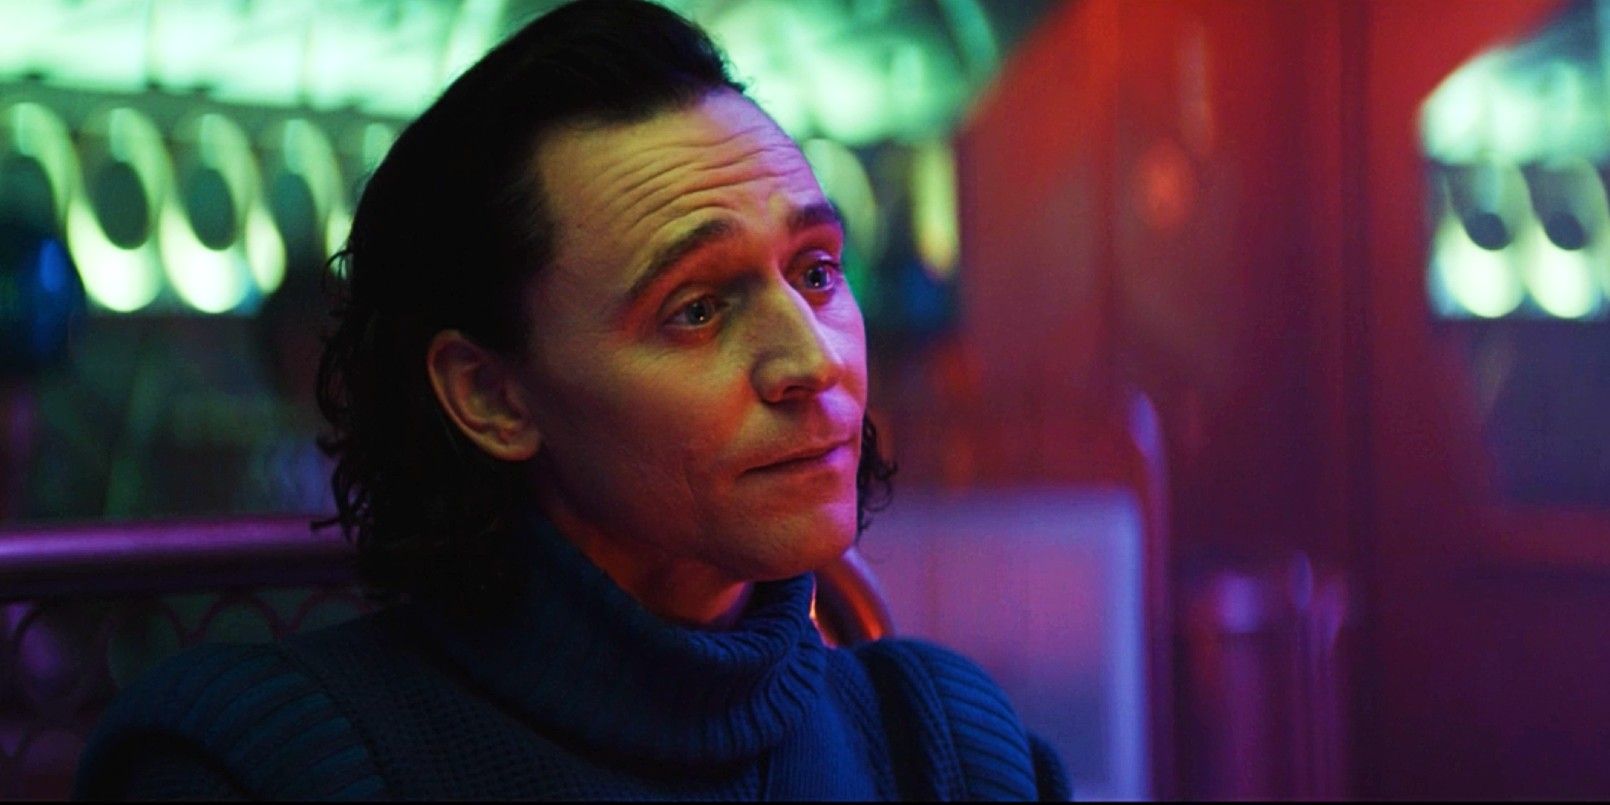 Tom Hiddleston as Loki in Loki Episode 3